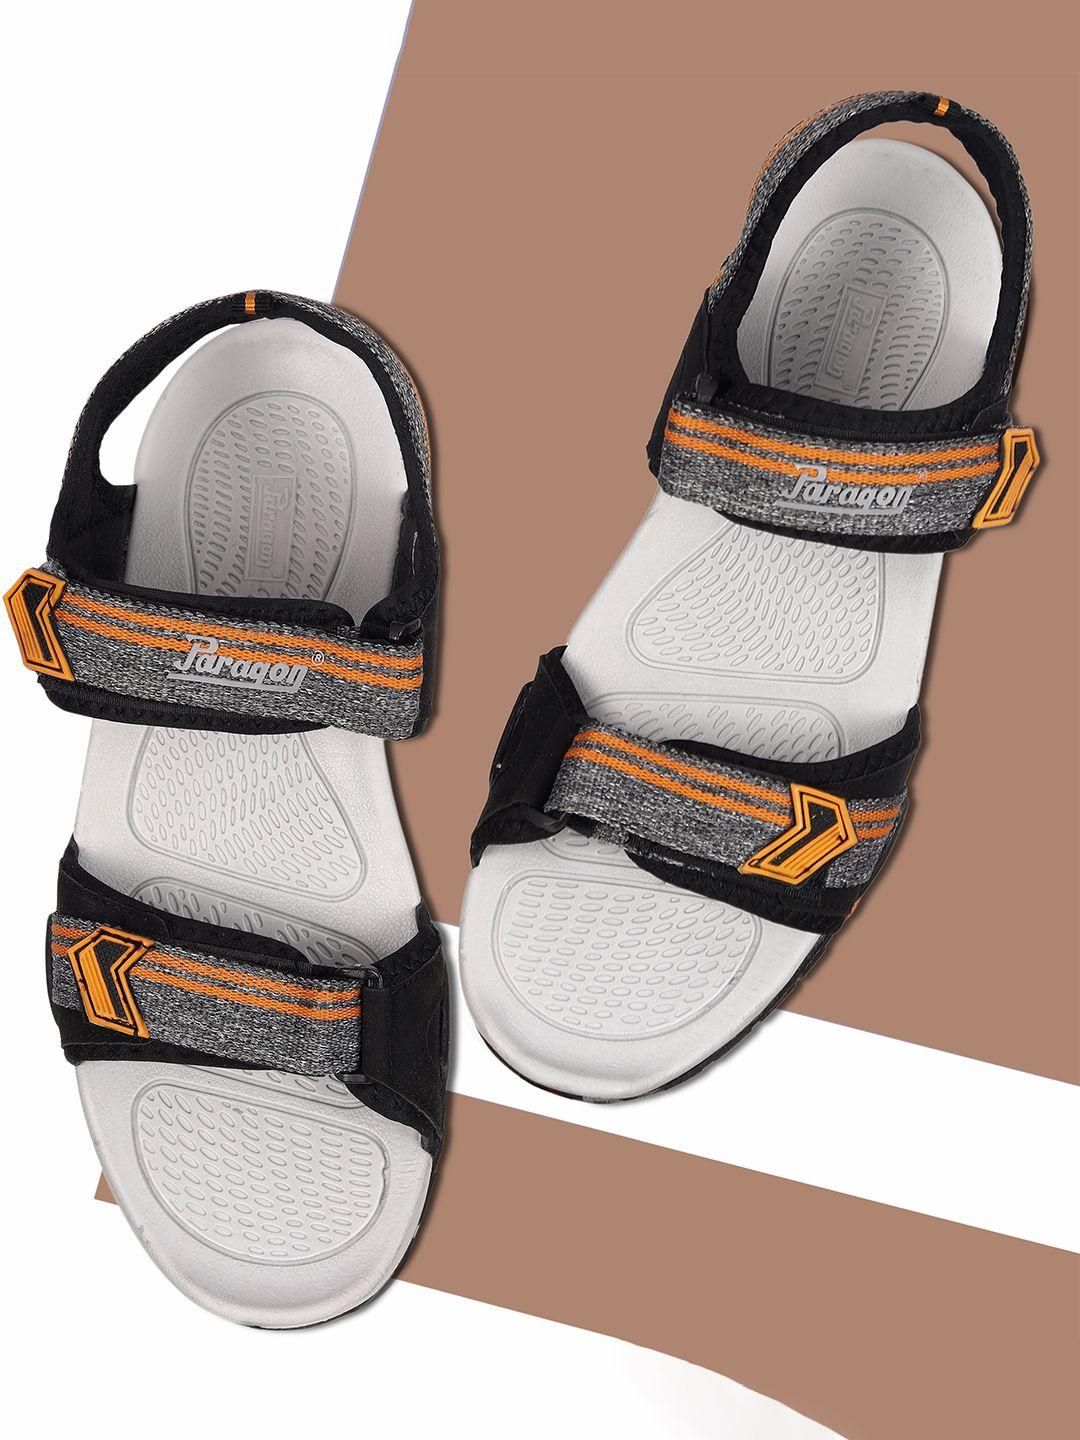 paragon-men-striped-comfortable-insole-&-anti-skid-sole-sports-sandals